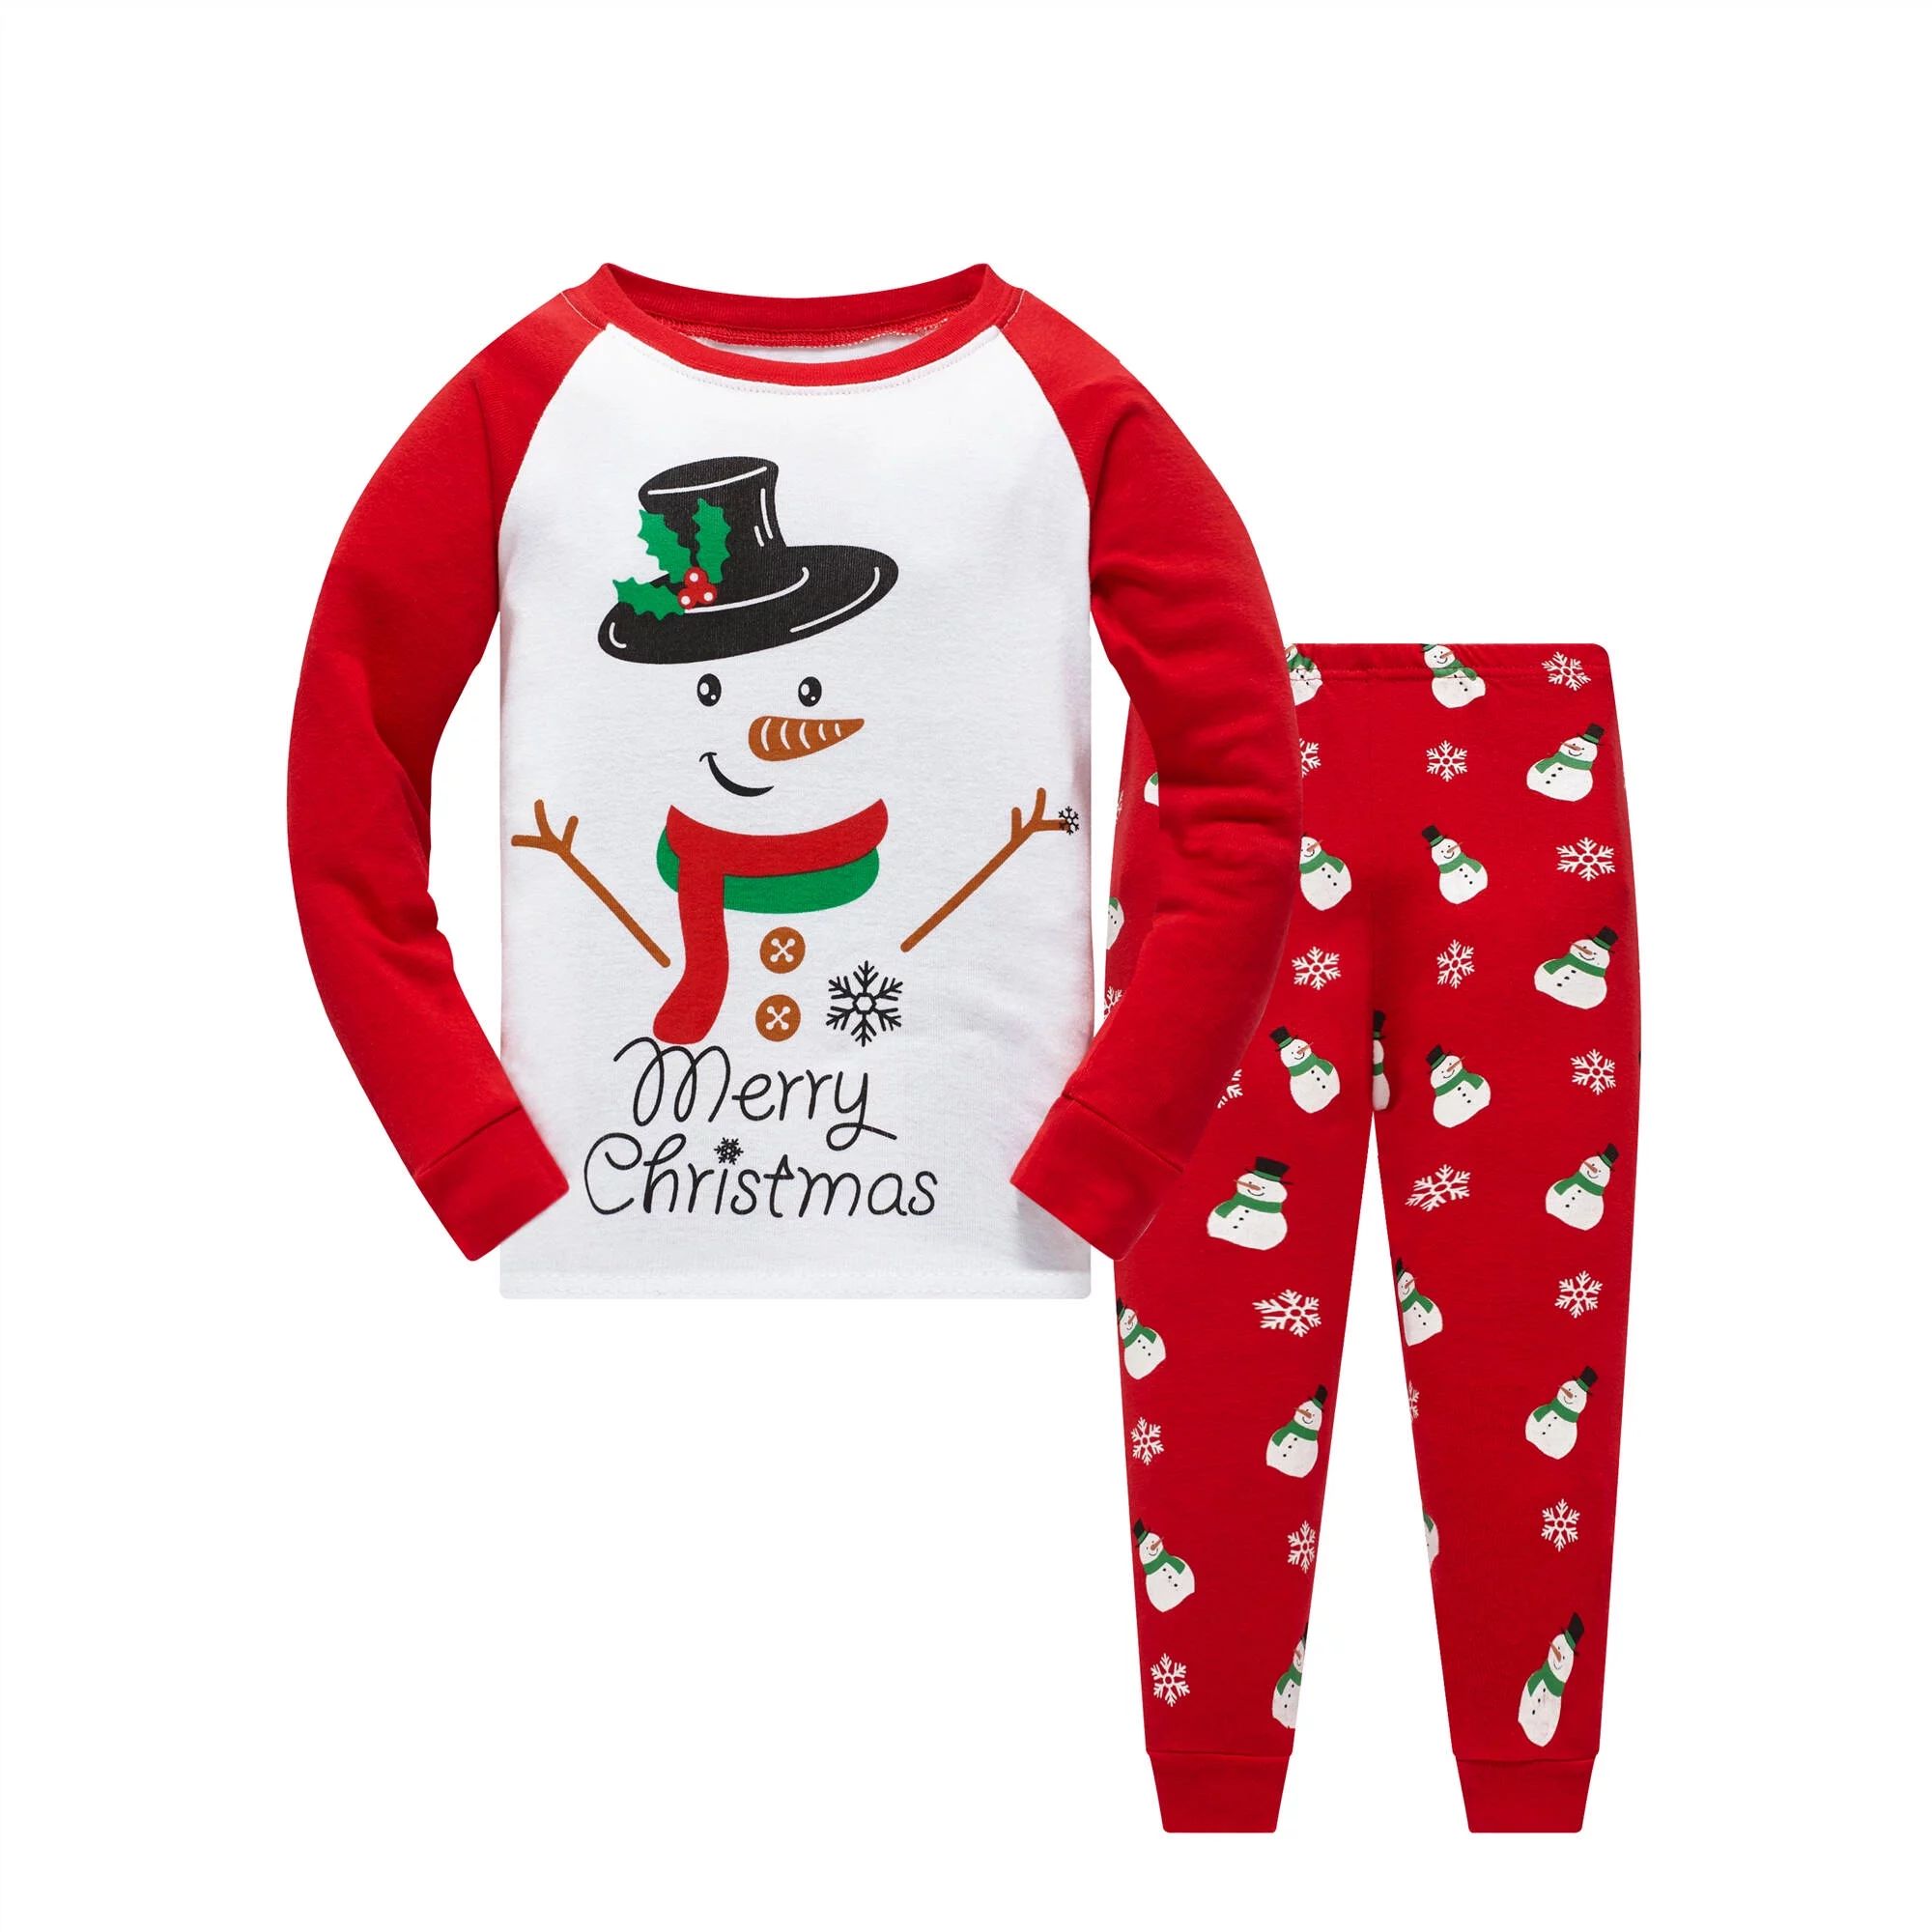 Toddler Boy Girl 100% Cotton Christmas Pajamas Sets for Baby Boys Snowman Sleepwear Size 5T | Walmart (US)